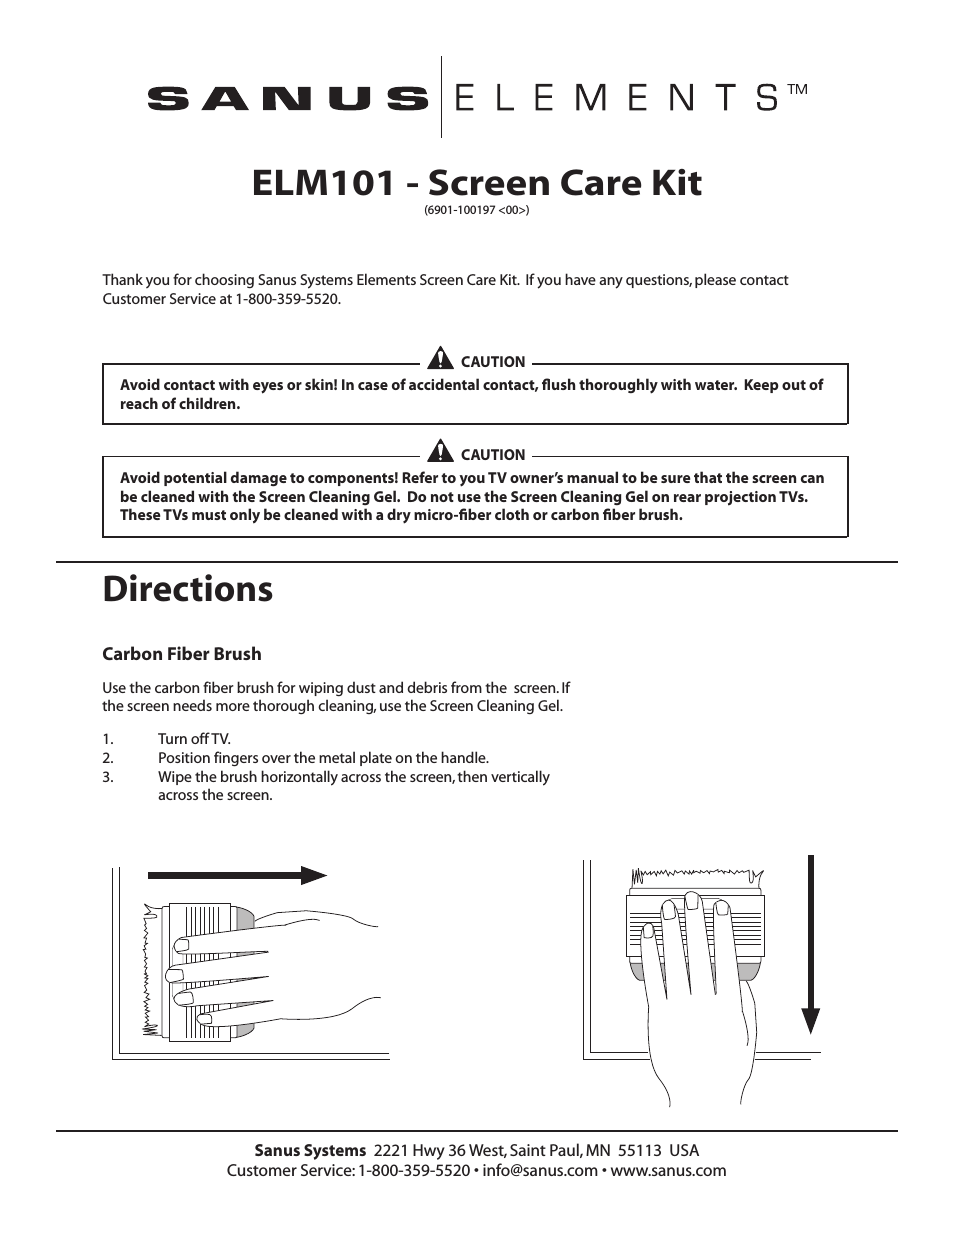 Screen Care Kit ELM101